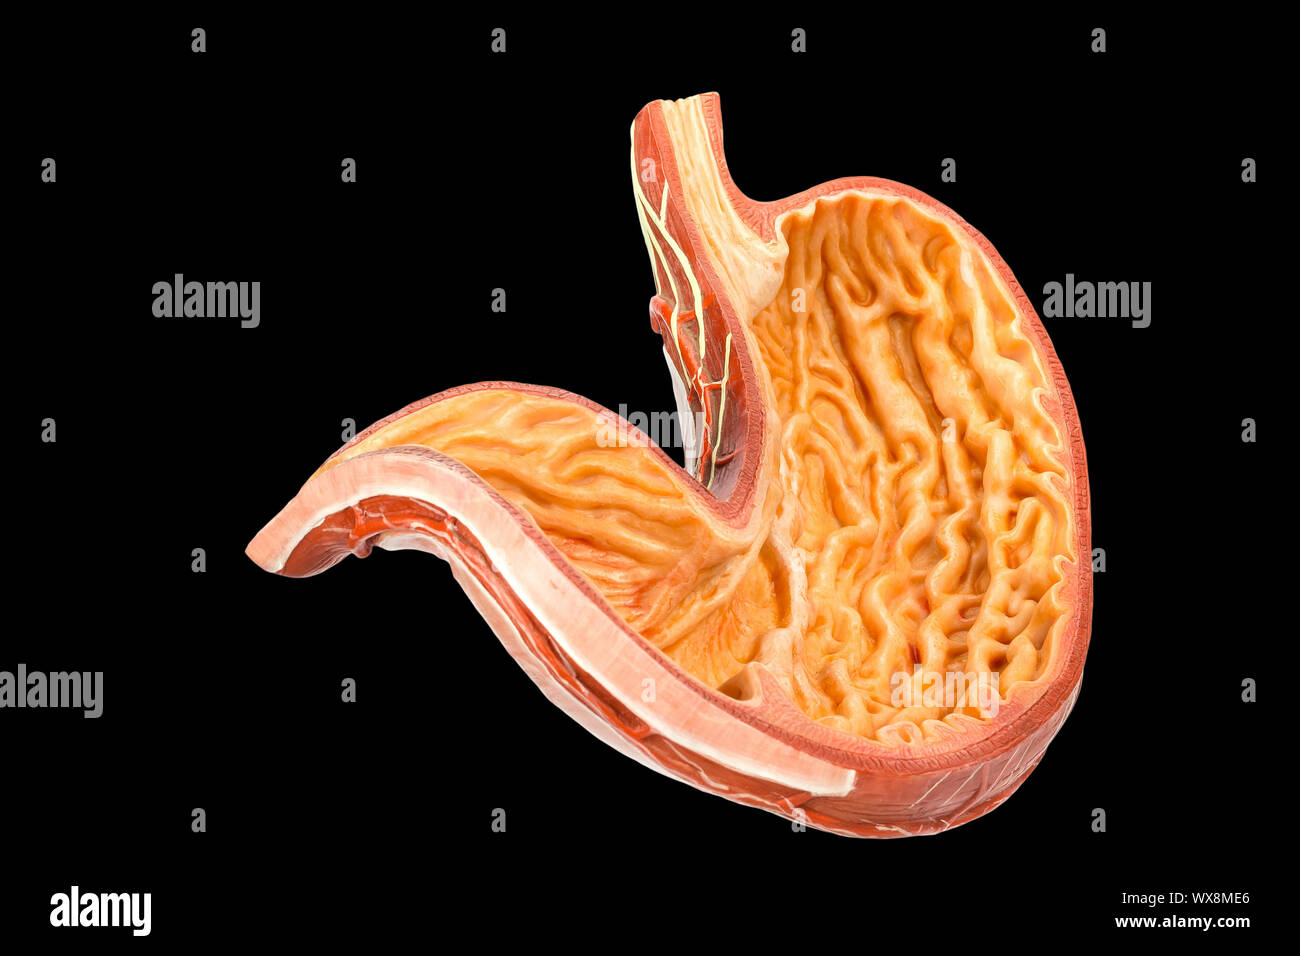 Inside of human stomach model on black background Stock Photo